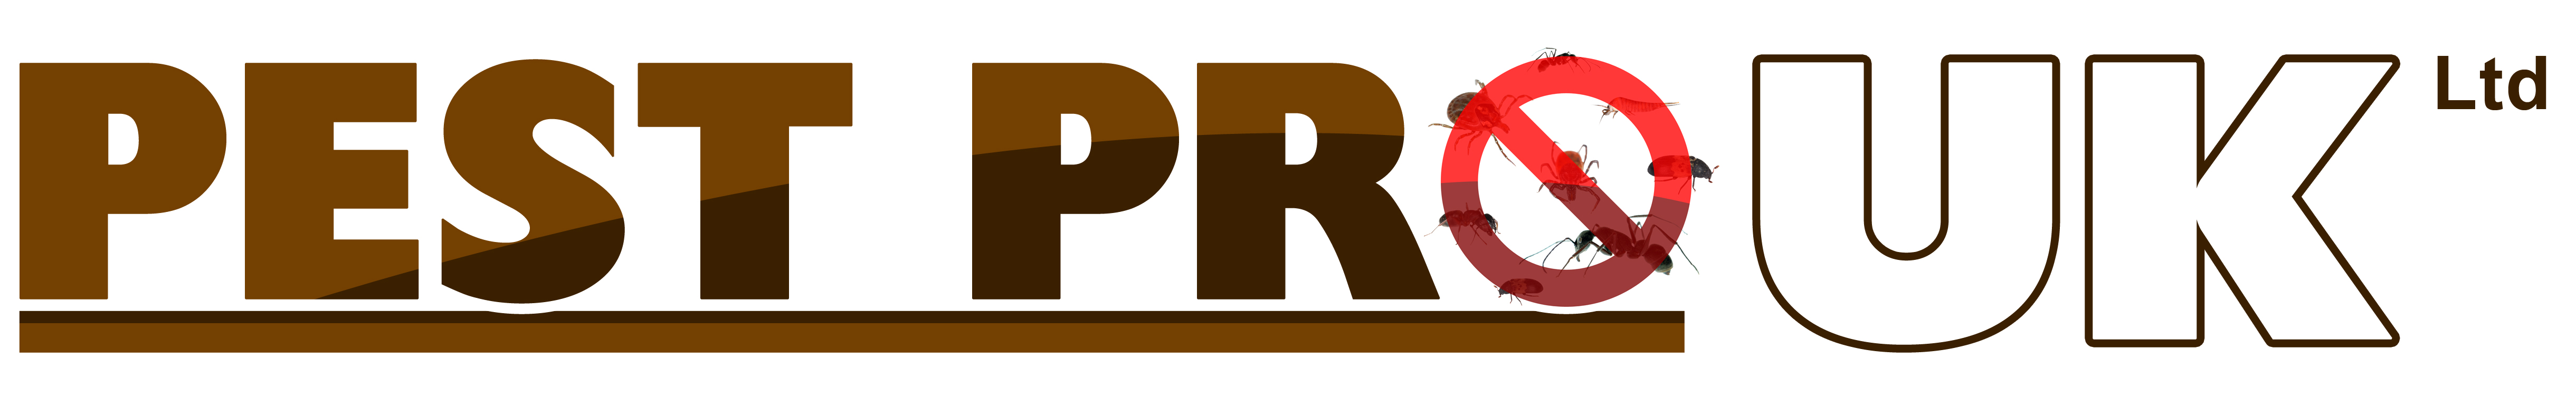 New Pestpro Logojpg